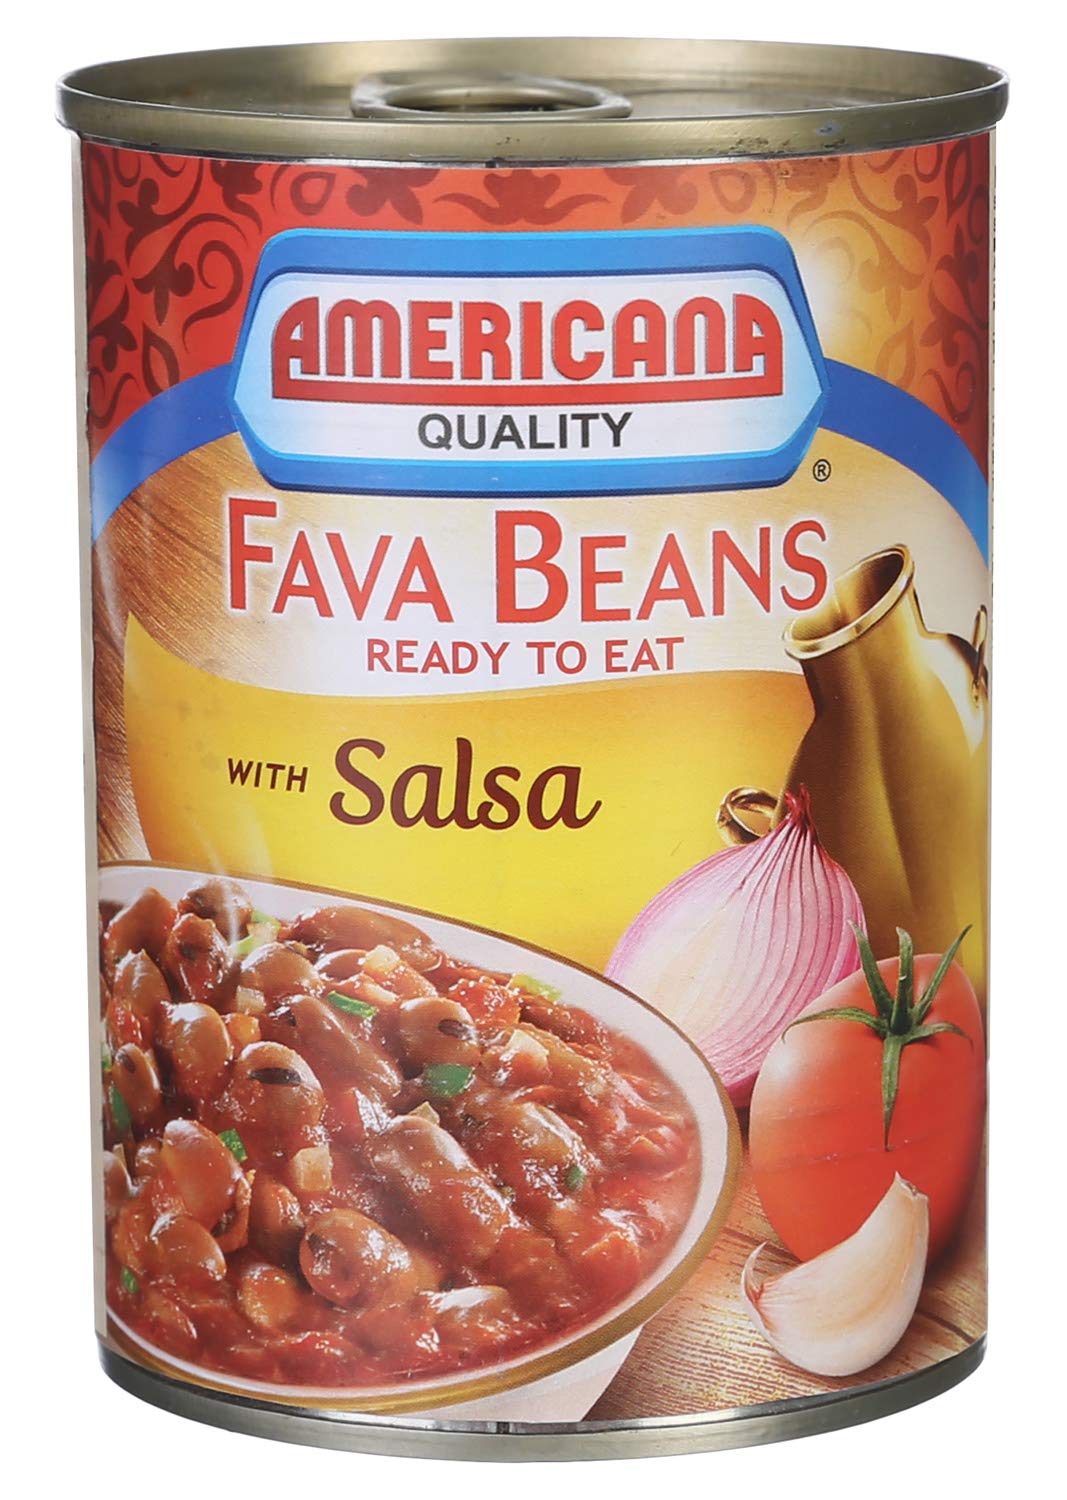 Americana Quality Fava Beans with Salsa 400g X 12